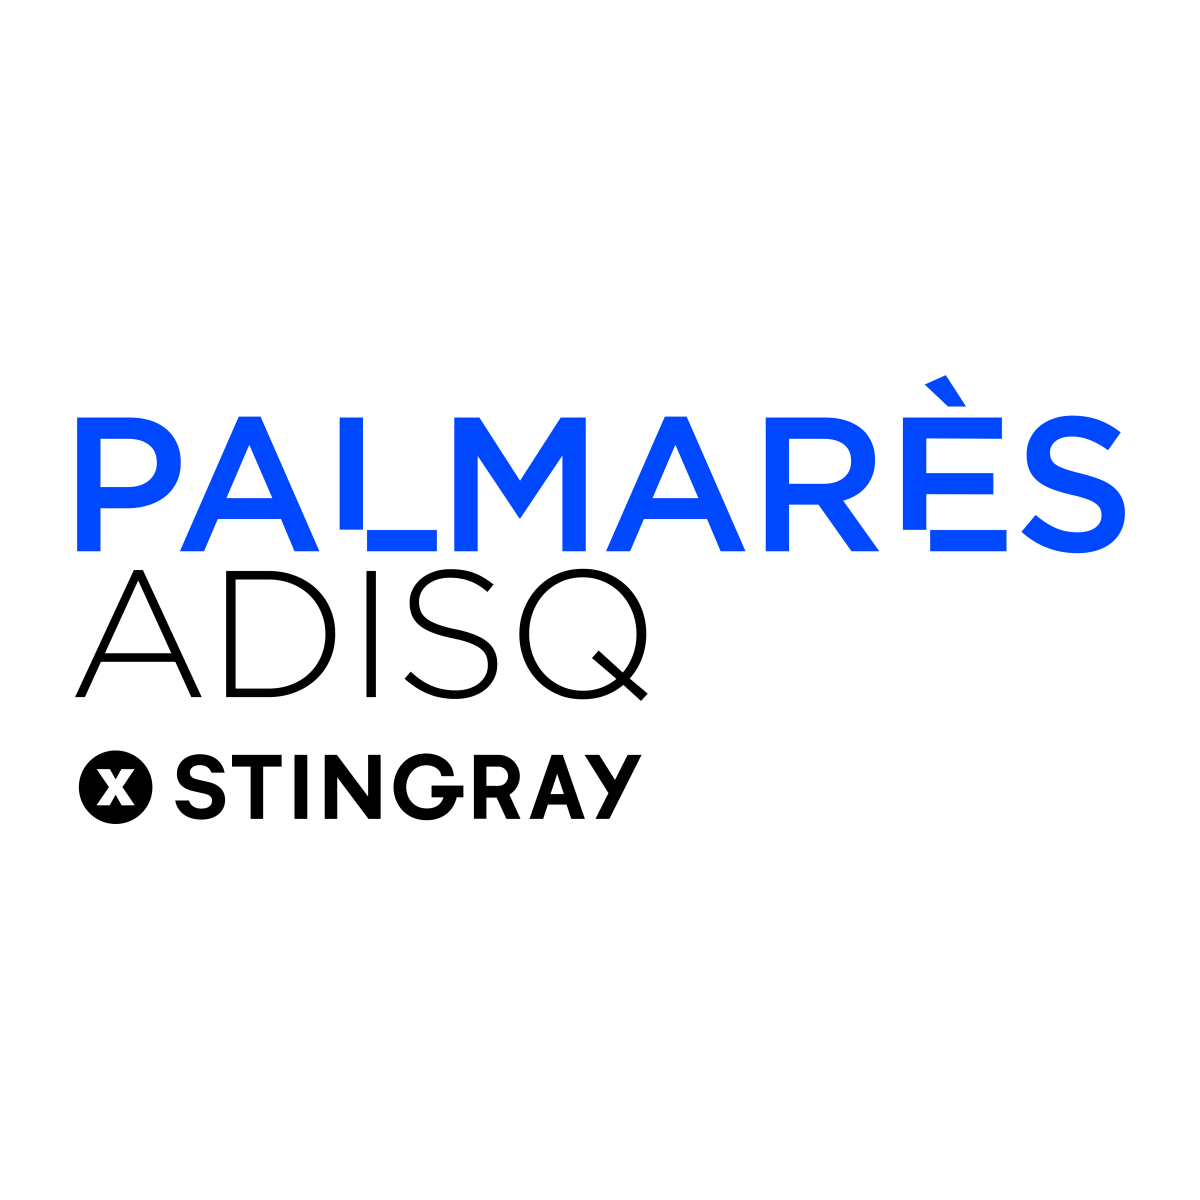 Stingray Palmarès Adisq